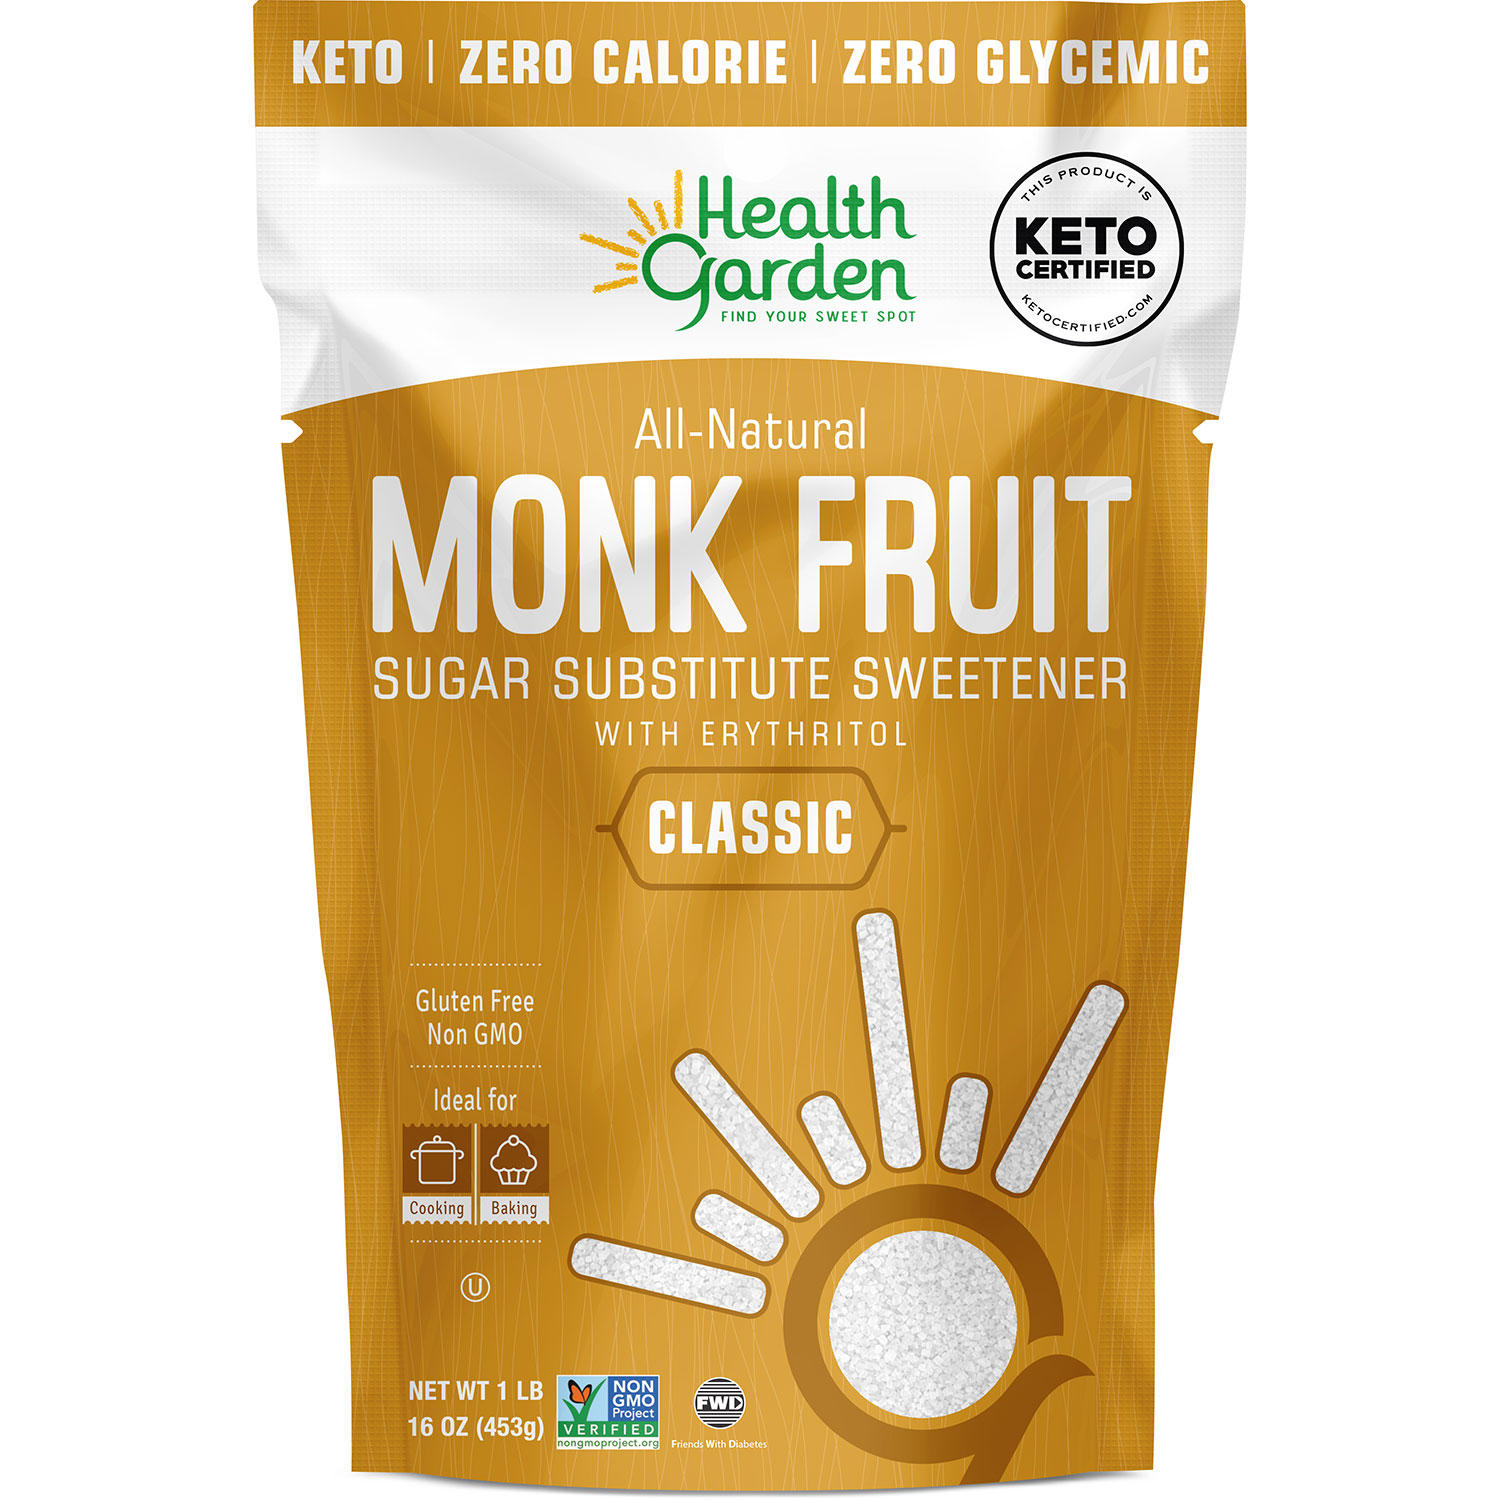 Health Garden Monk Fruit Sweetener, Classic- Non GMO – Gluten Free – Sugar Substitute – Kosher – Keto Friendly (1 lb)